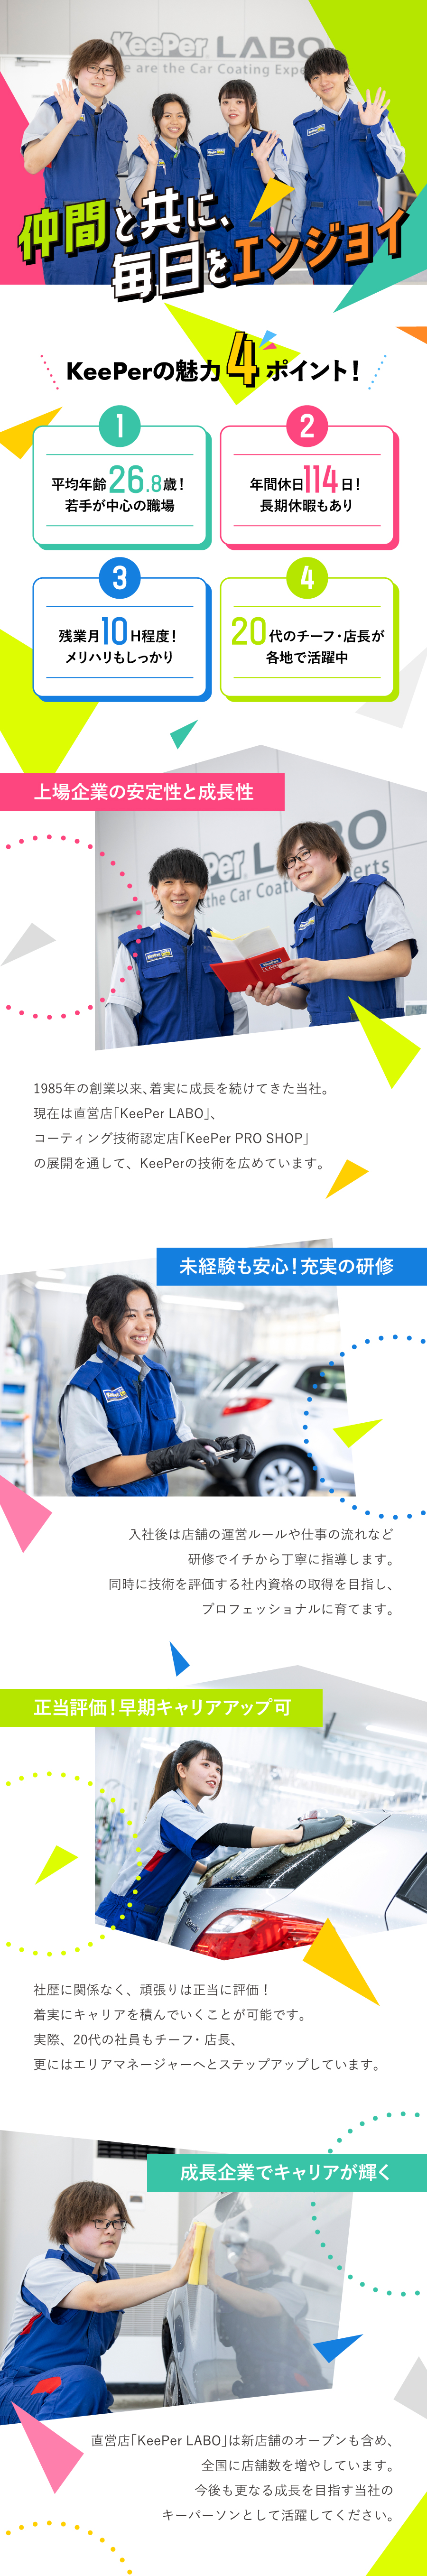 KeePer技研株式会社からのメッセージ